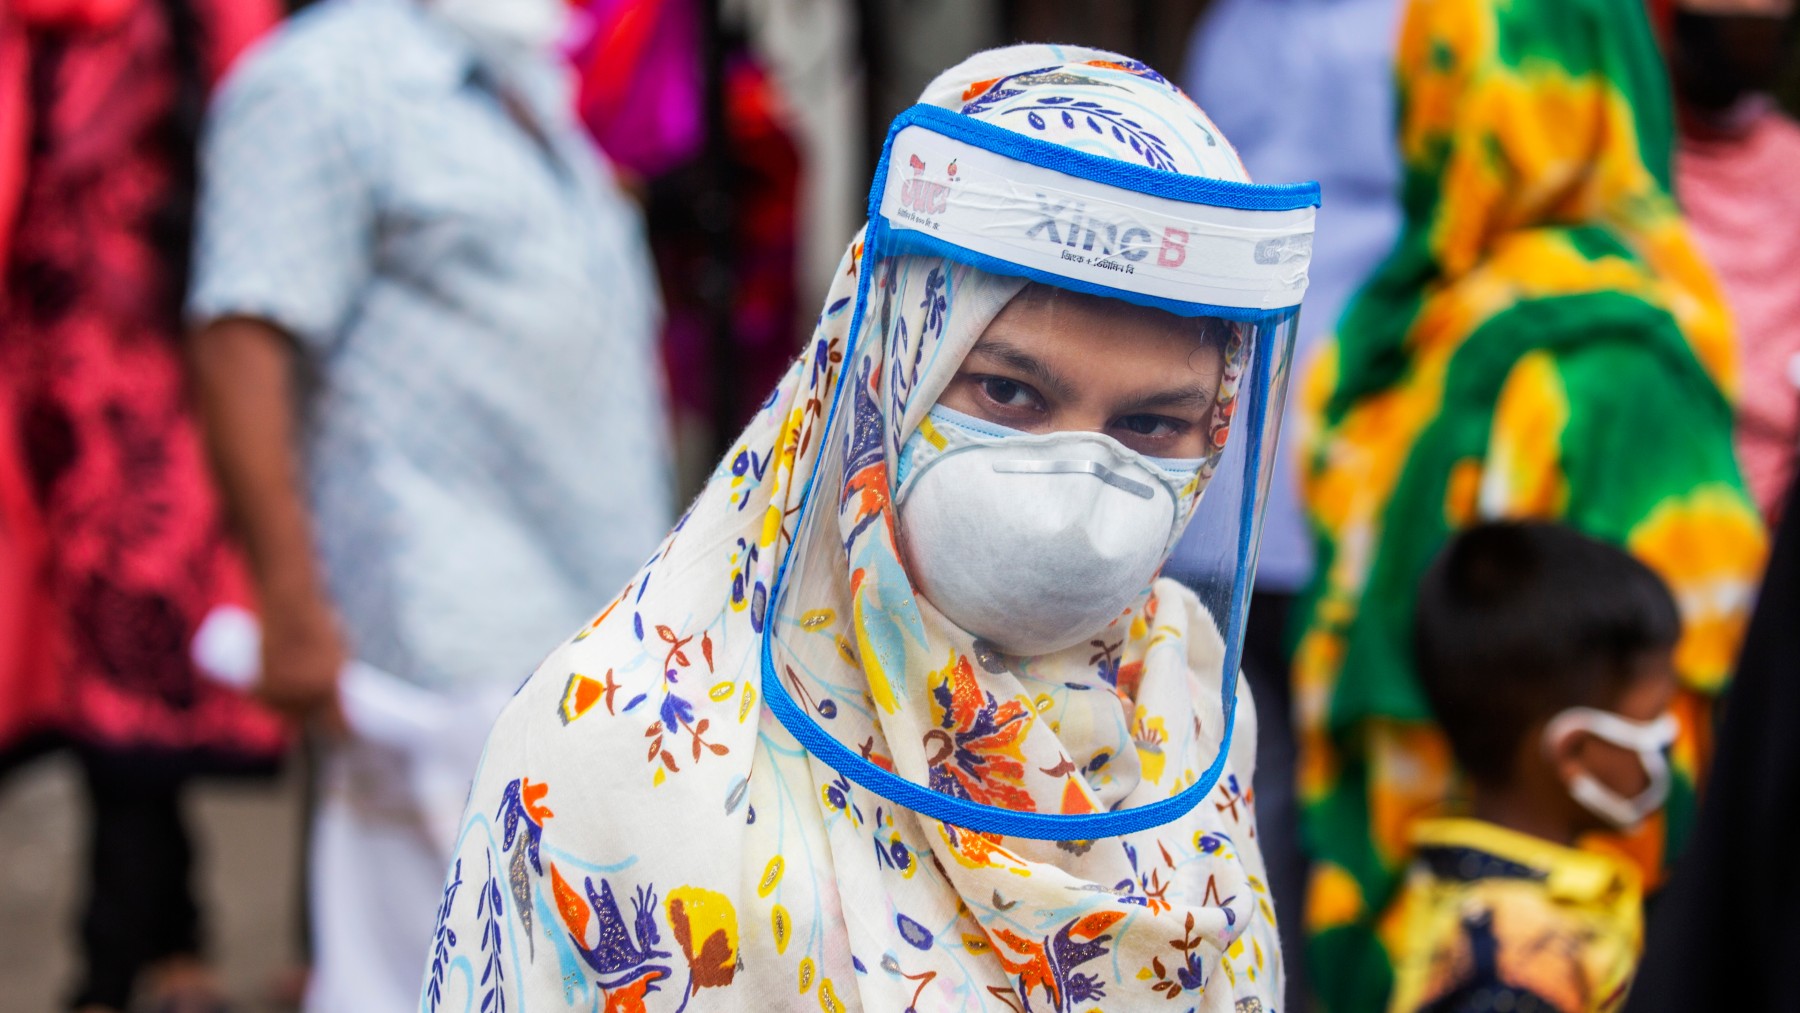 A woman wearing a face mask amid the coronavirus pandemic in Dhaka, Bangladesh (File image)